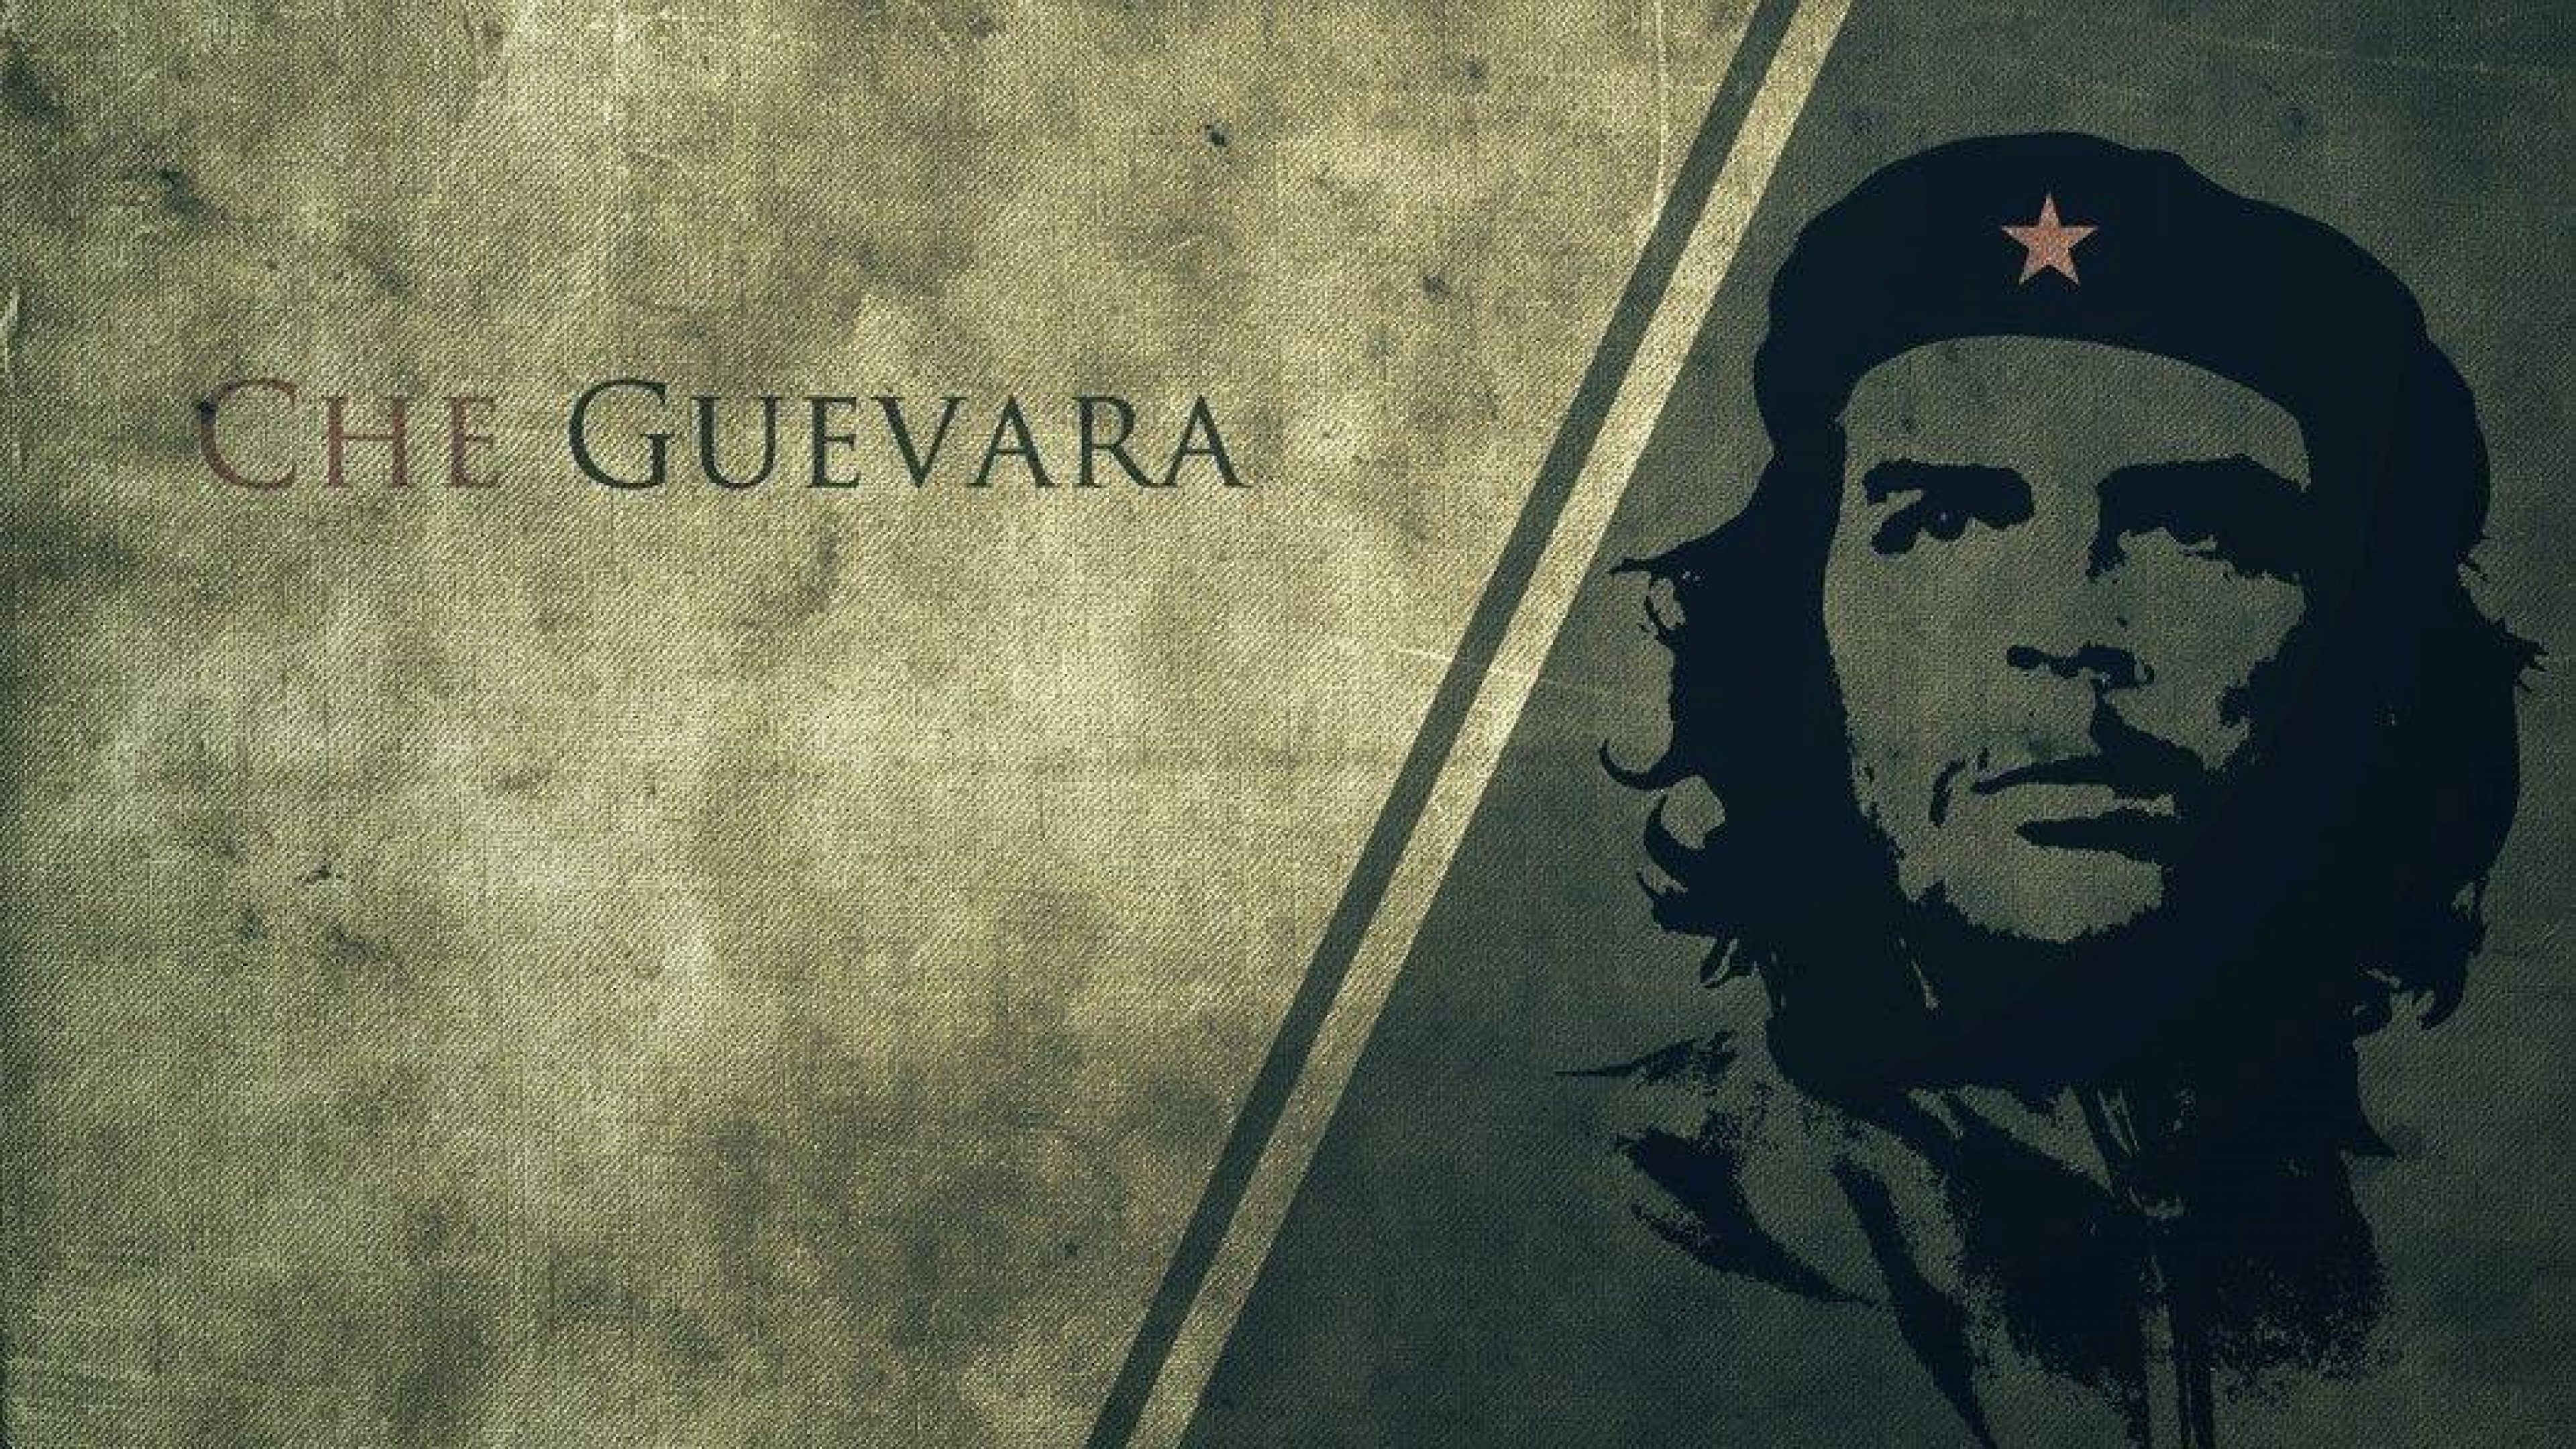 HD Wallpaper Of Che Guevara